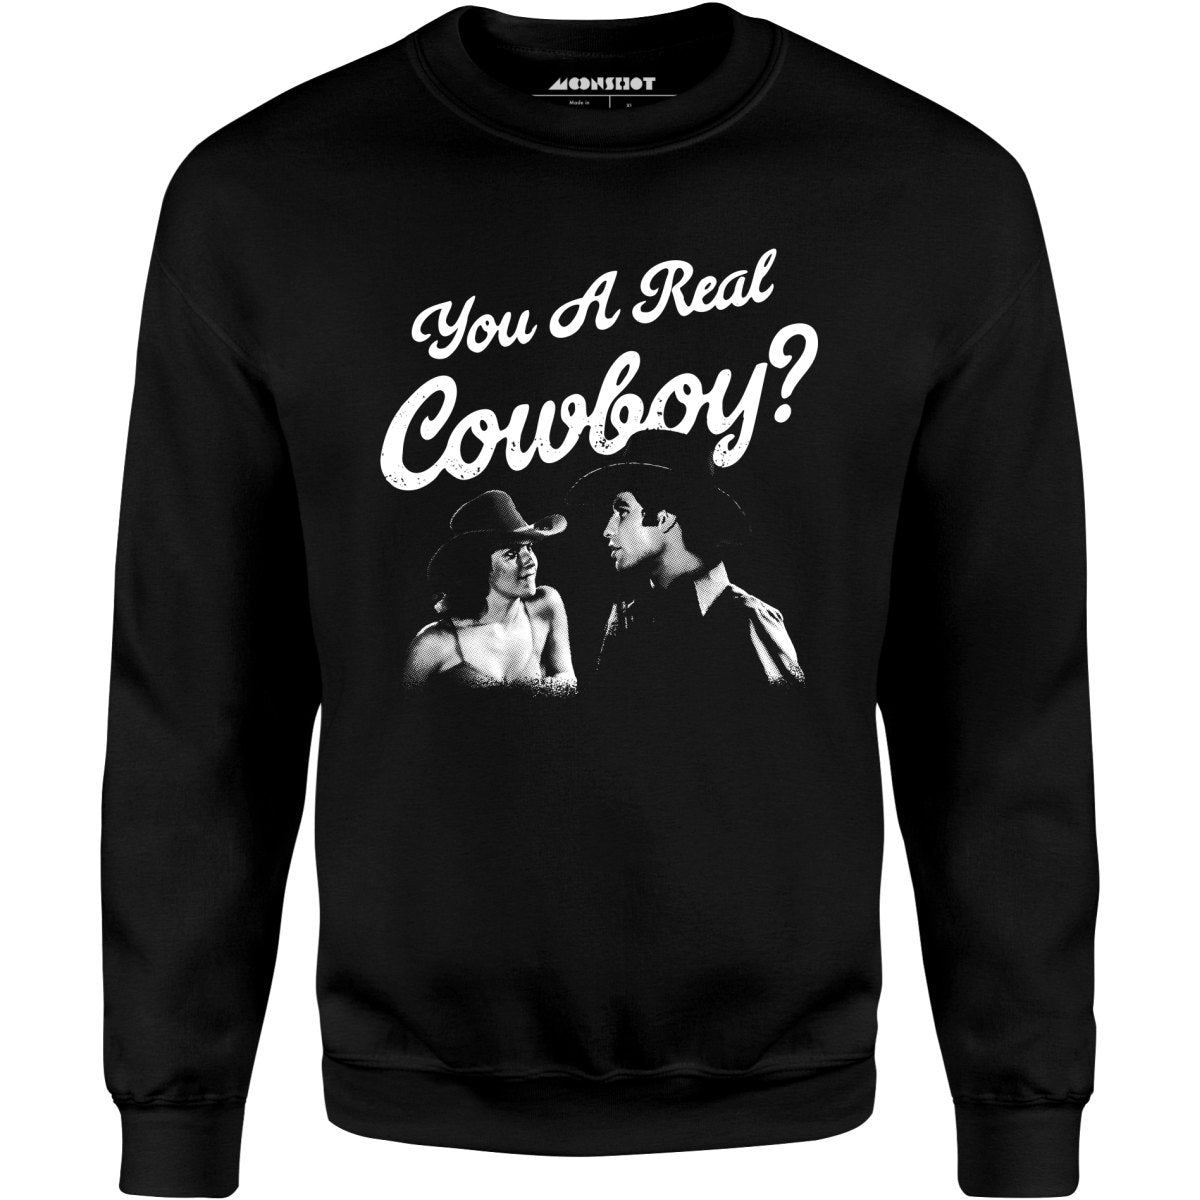 You a Real Cowboy? - Unisex Sweatshirt